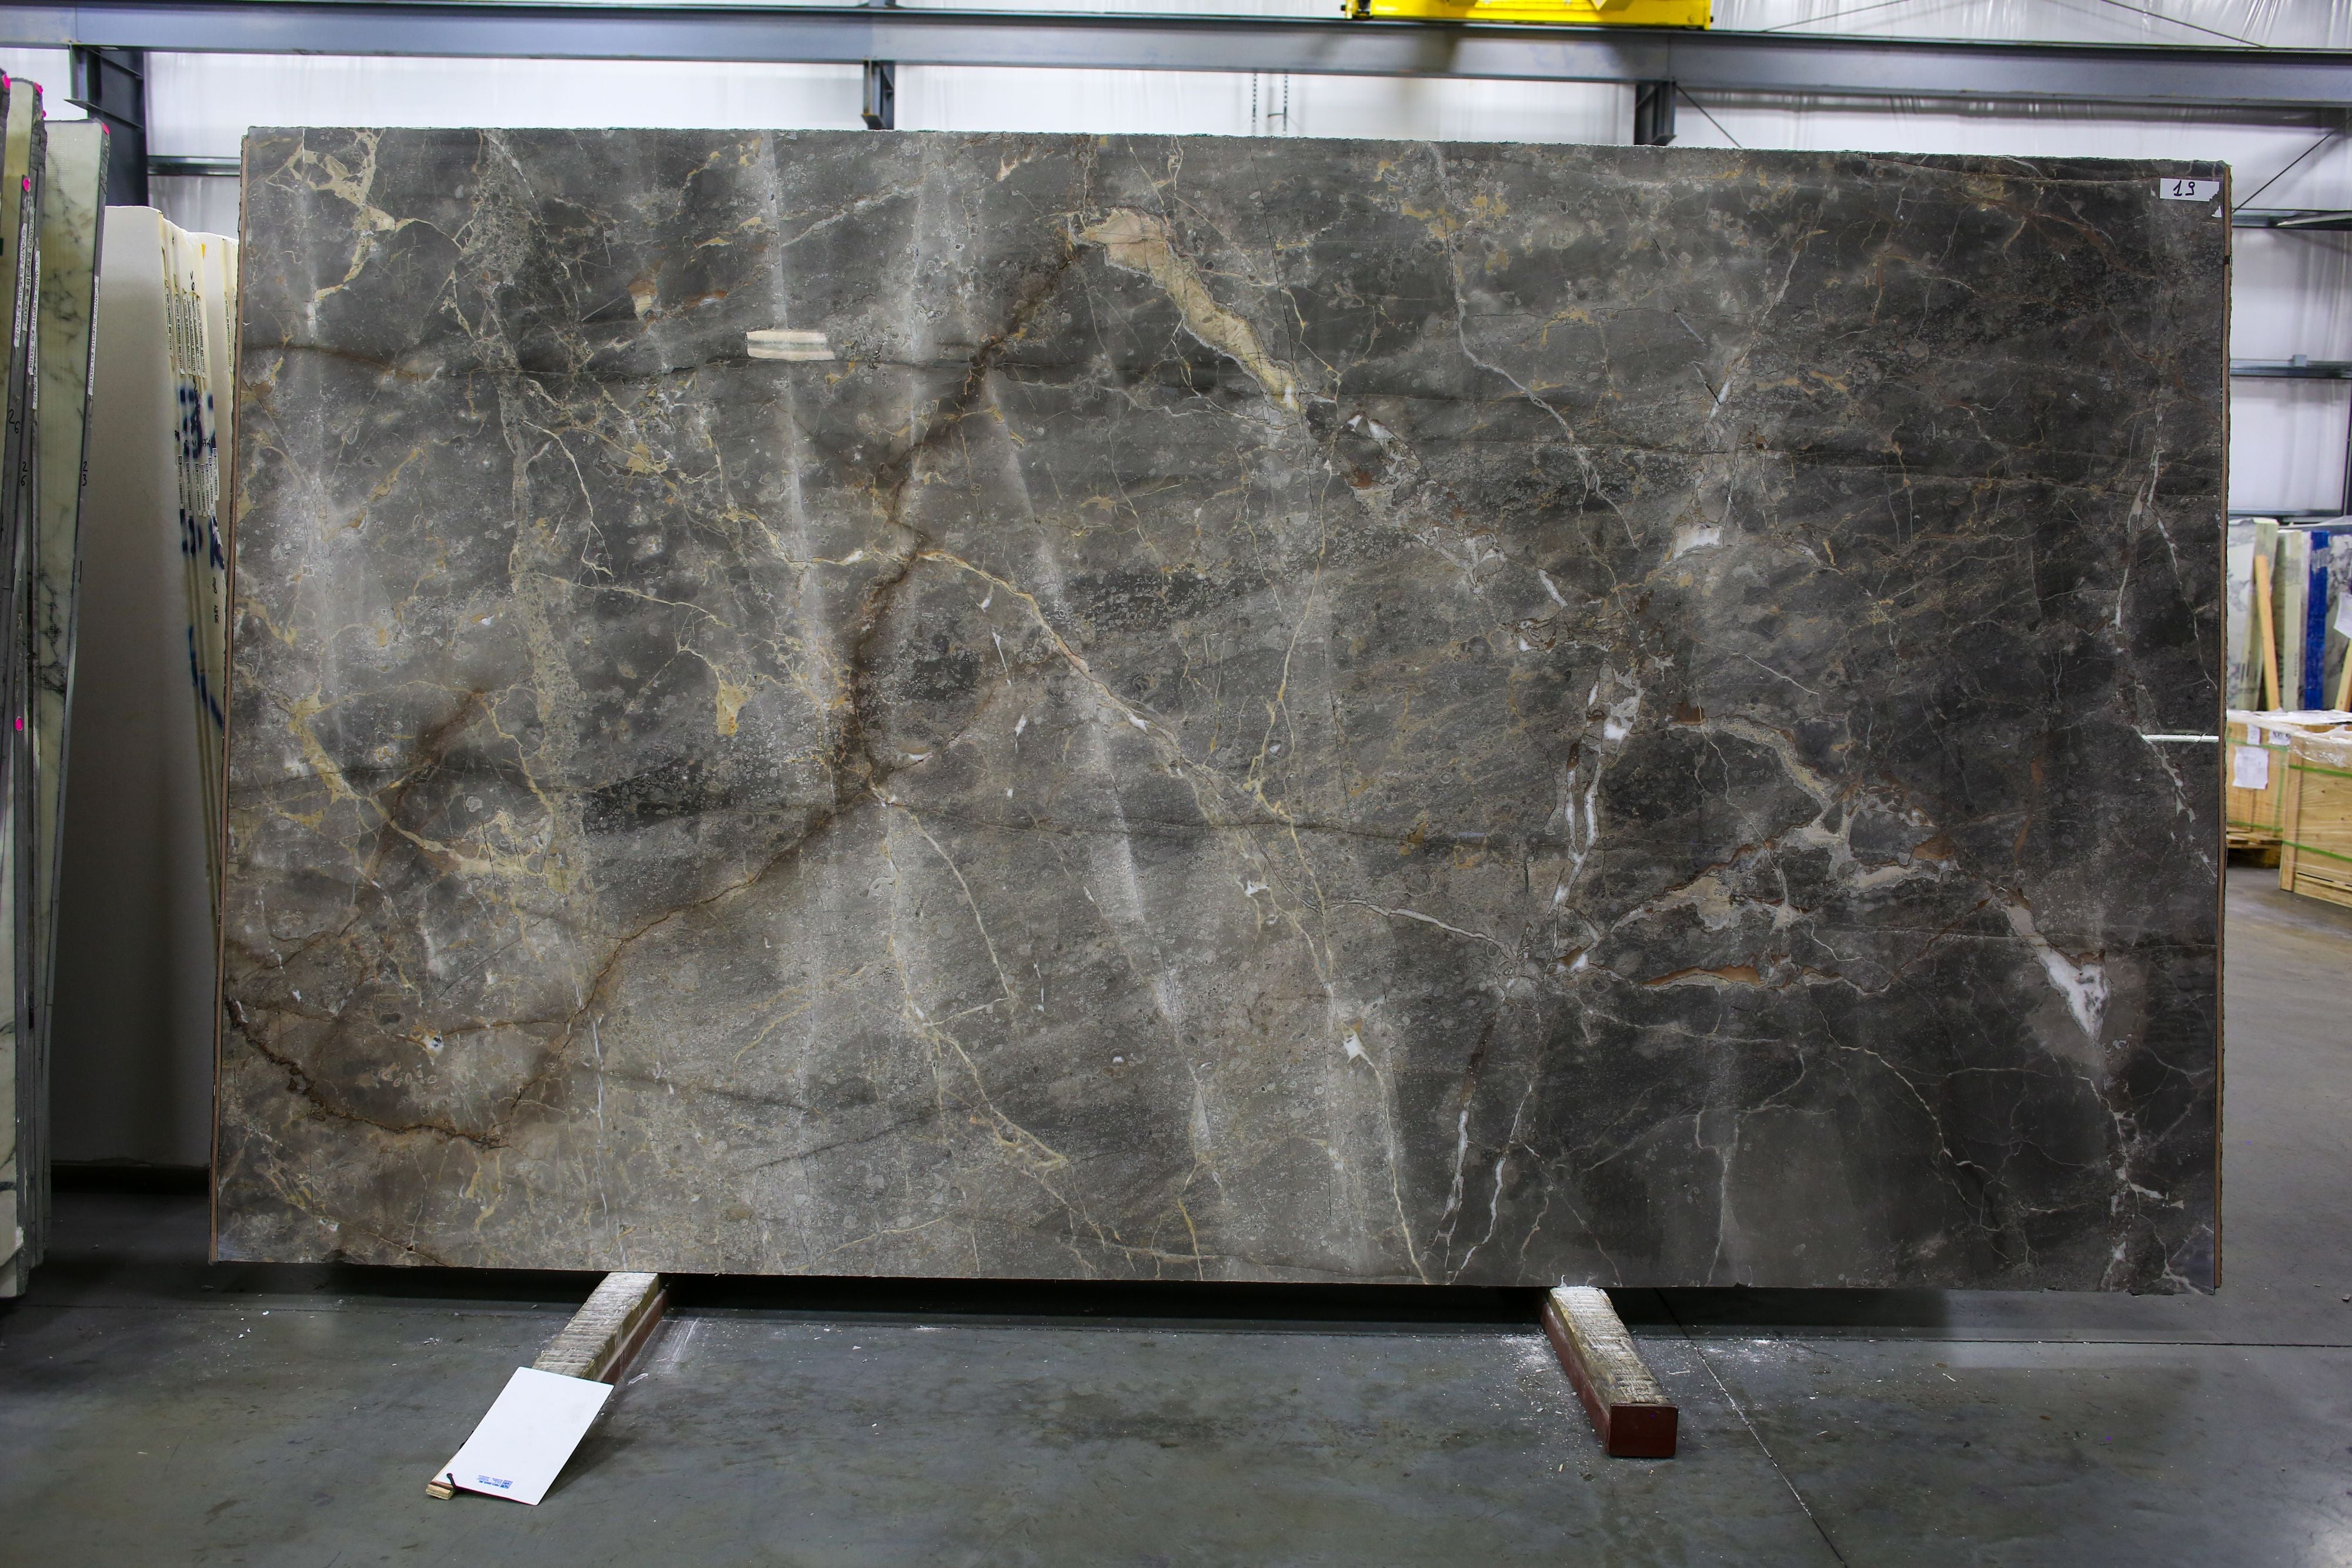  Fior Di Bosco Marble Slab 3/4  Polished Stone - VR5671#19 -  44x62 